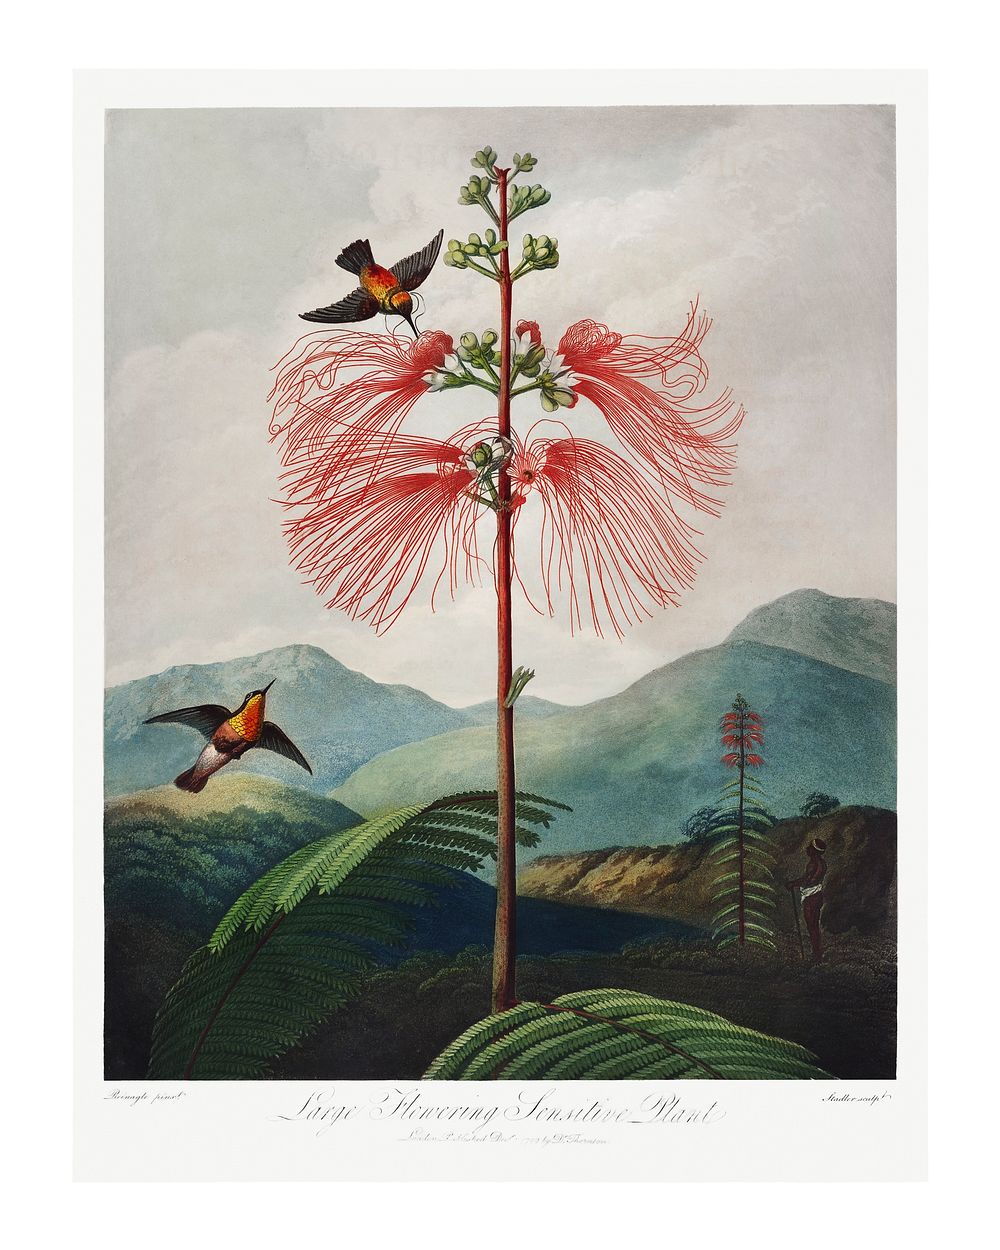 Red flower poster. Flowering Sensitive Plant (1807) by Robert John Thornton. Original from Biodiversity Heritage Library.…